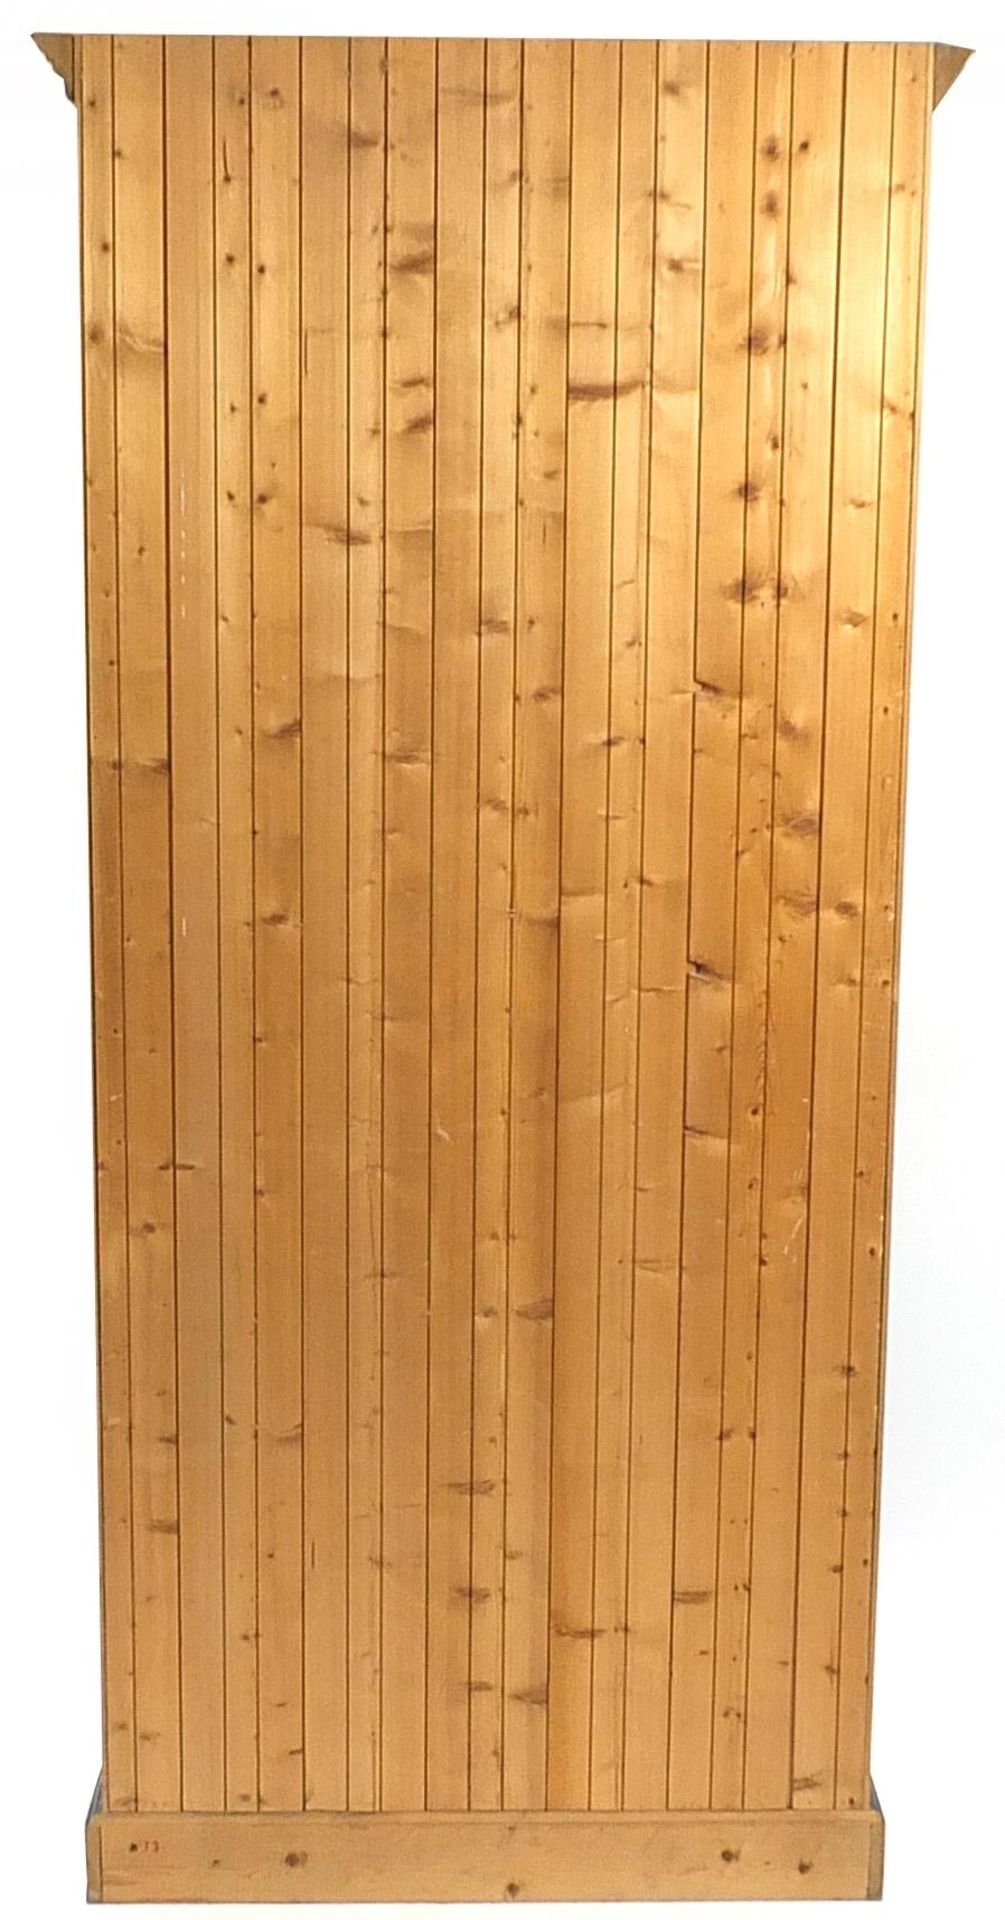 Painted pine six shelf open bookcase with adjustable shelves, 200cm H x 94cm W x 36cm D - Image 3 of 3